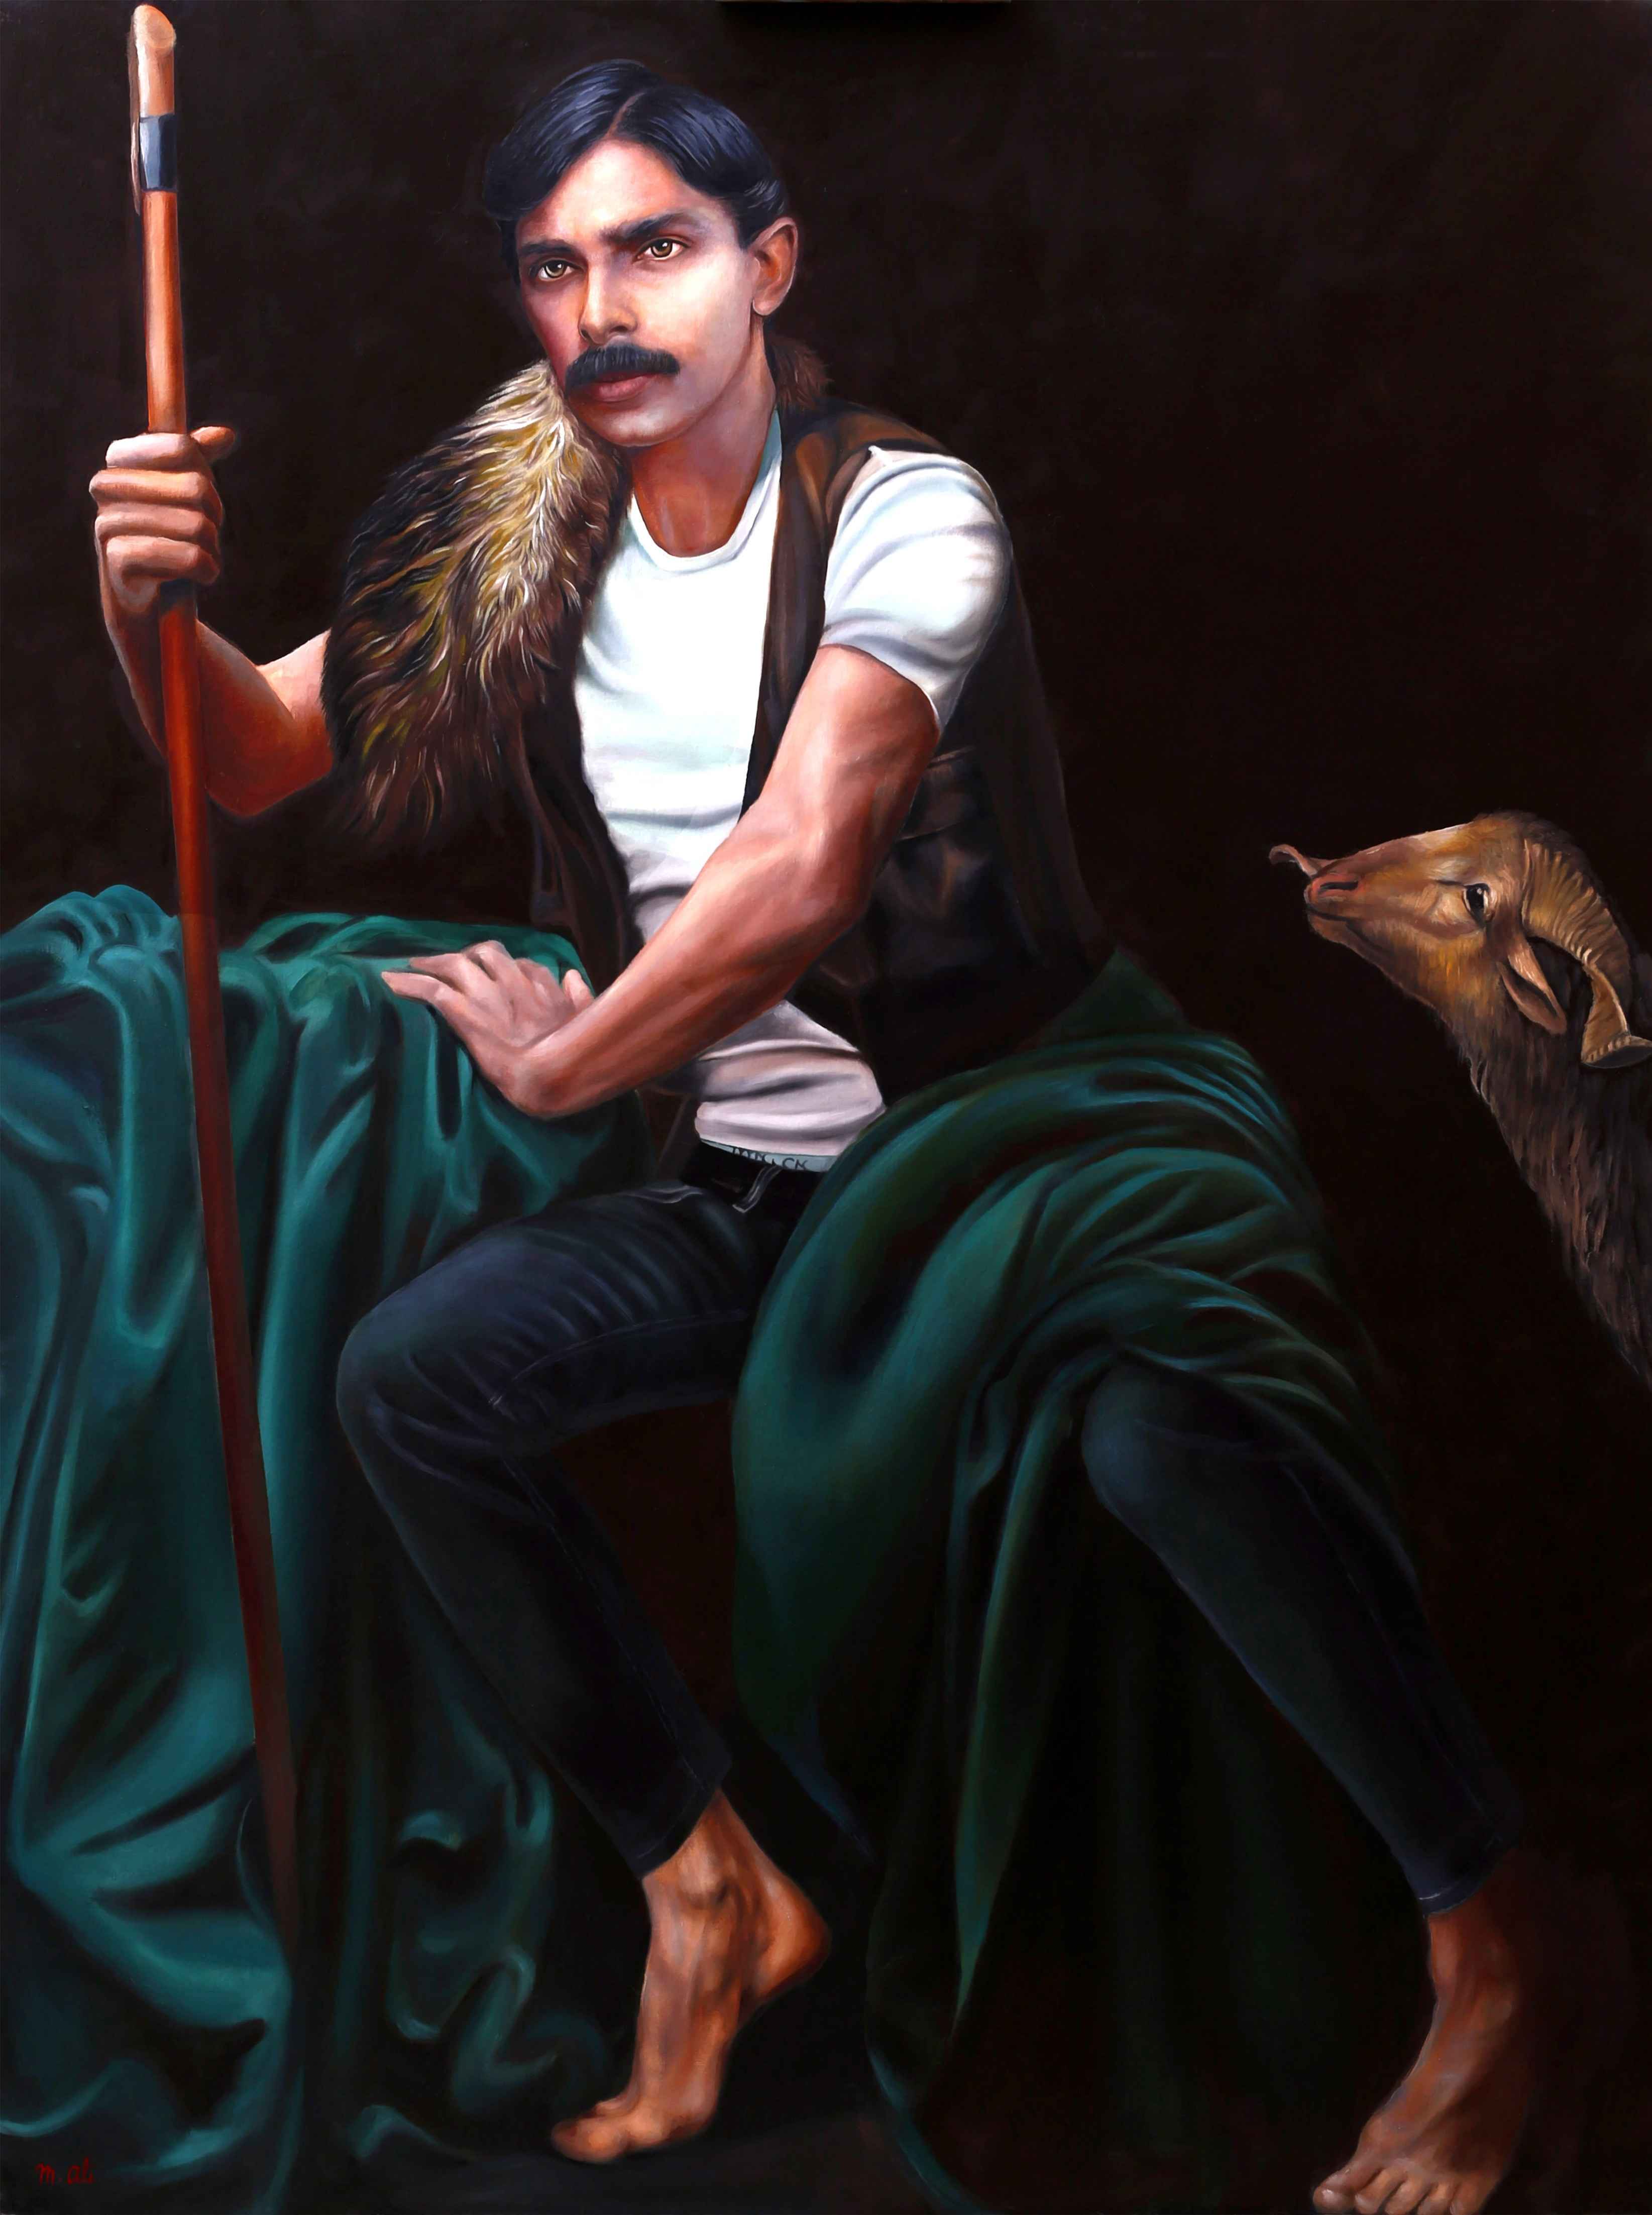 Title: The Good Shepherd Medium<br> Medium: Oil on Canvas<br> Size: 48x36inches